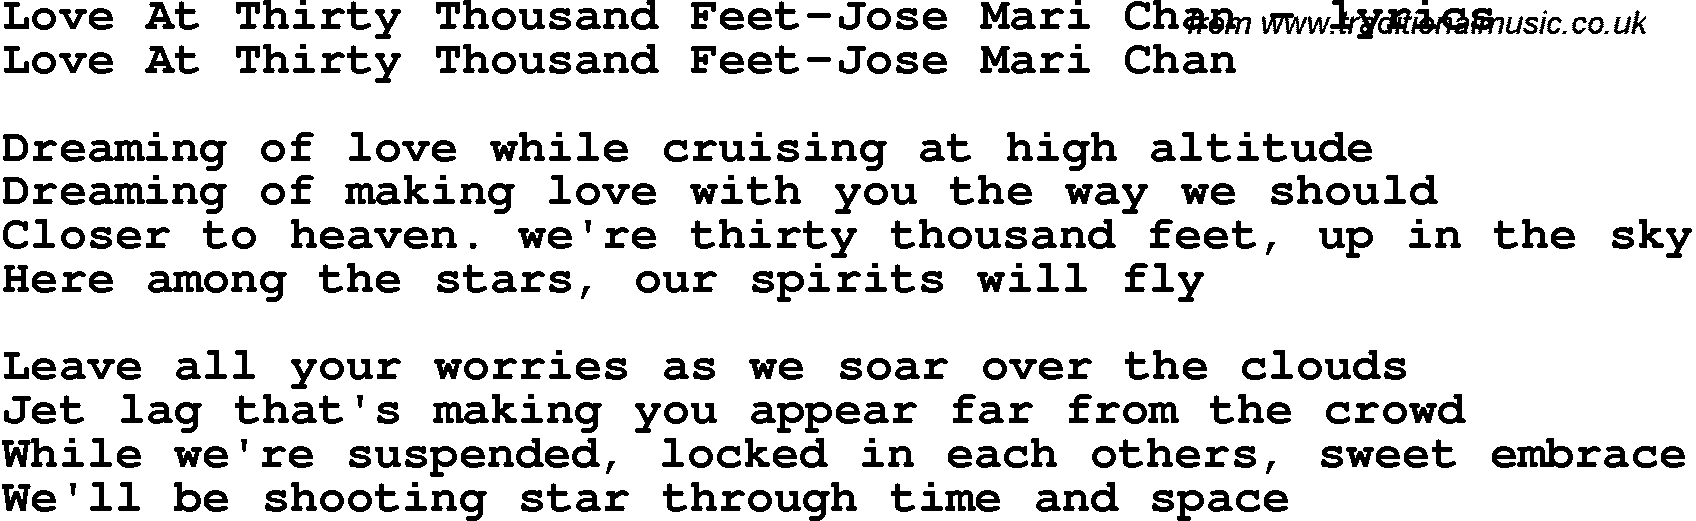 Love Song Lyrics for: Love At Thirty Thousand Feet-Jose Mari Chan